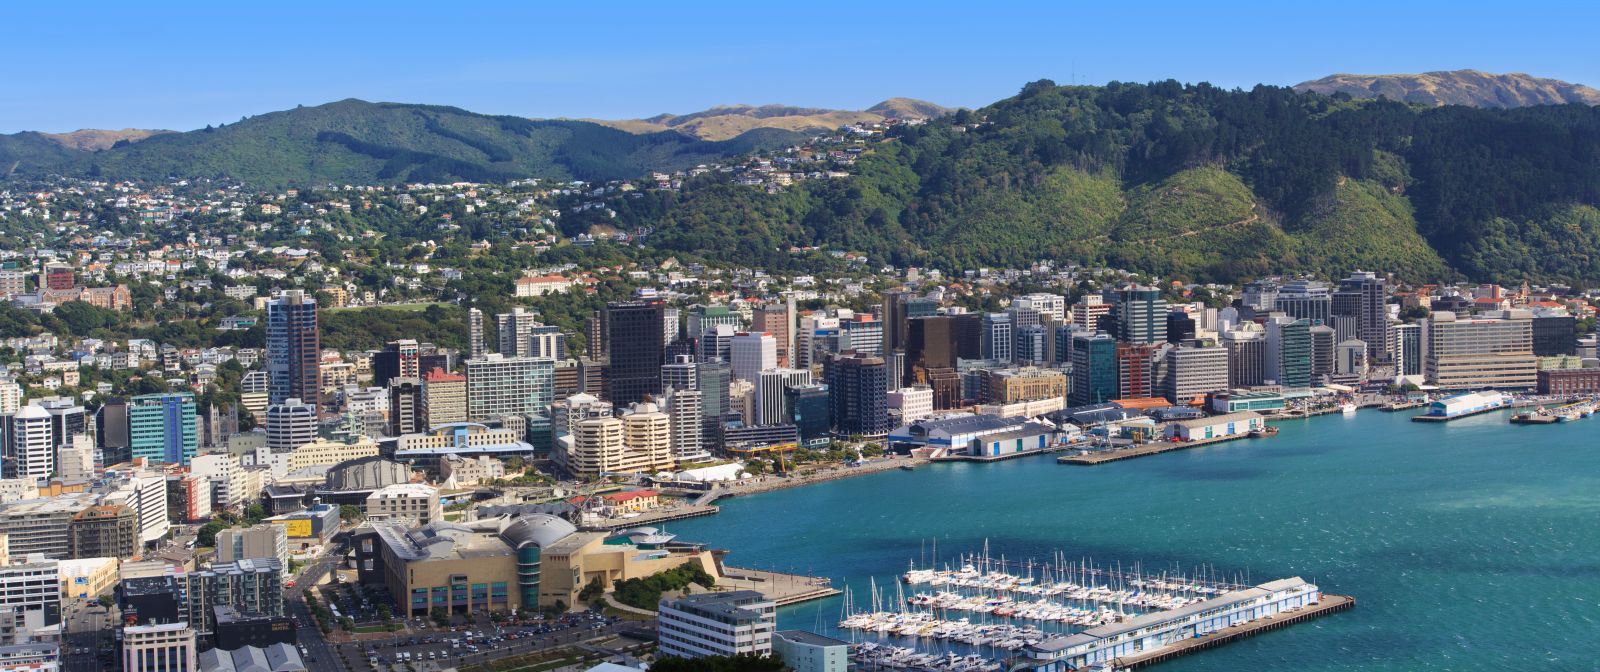 Landscape of New Zealand's city.